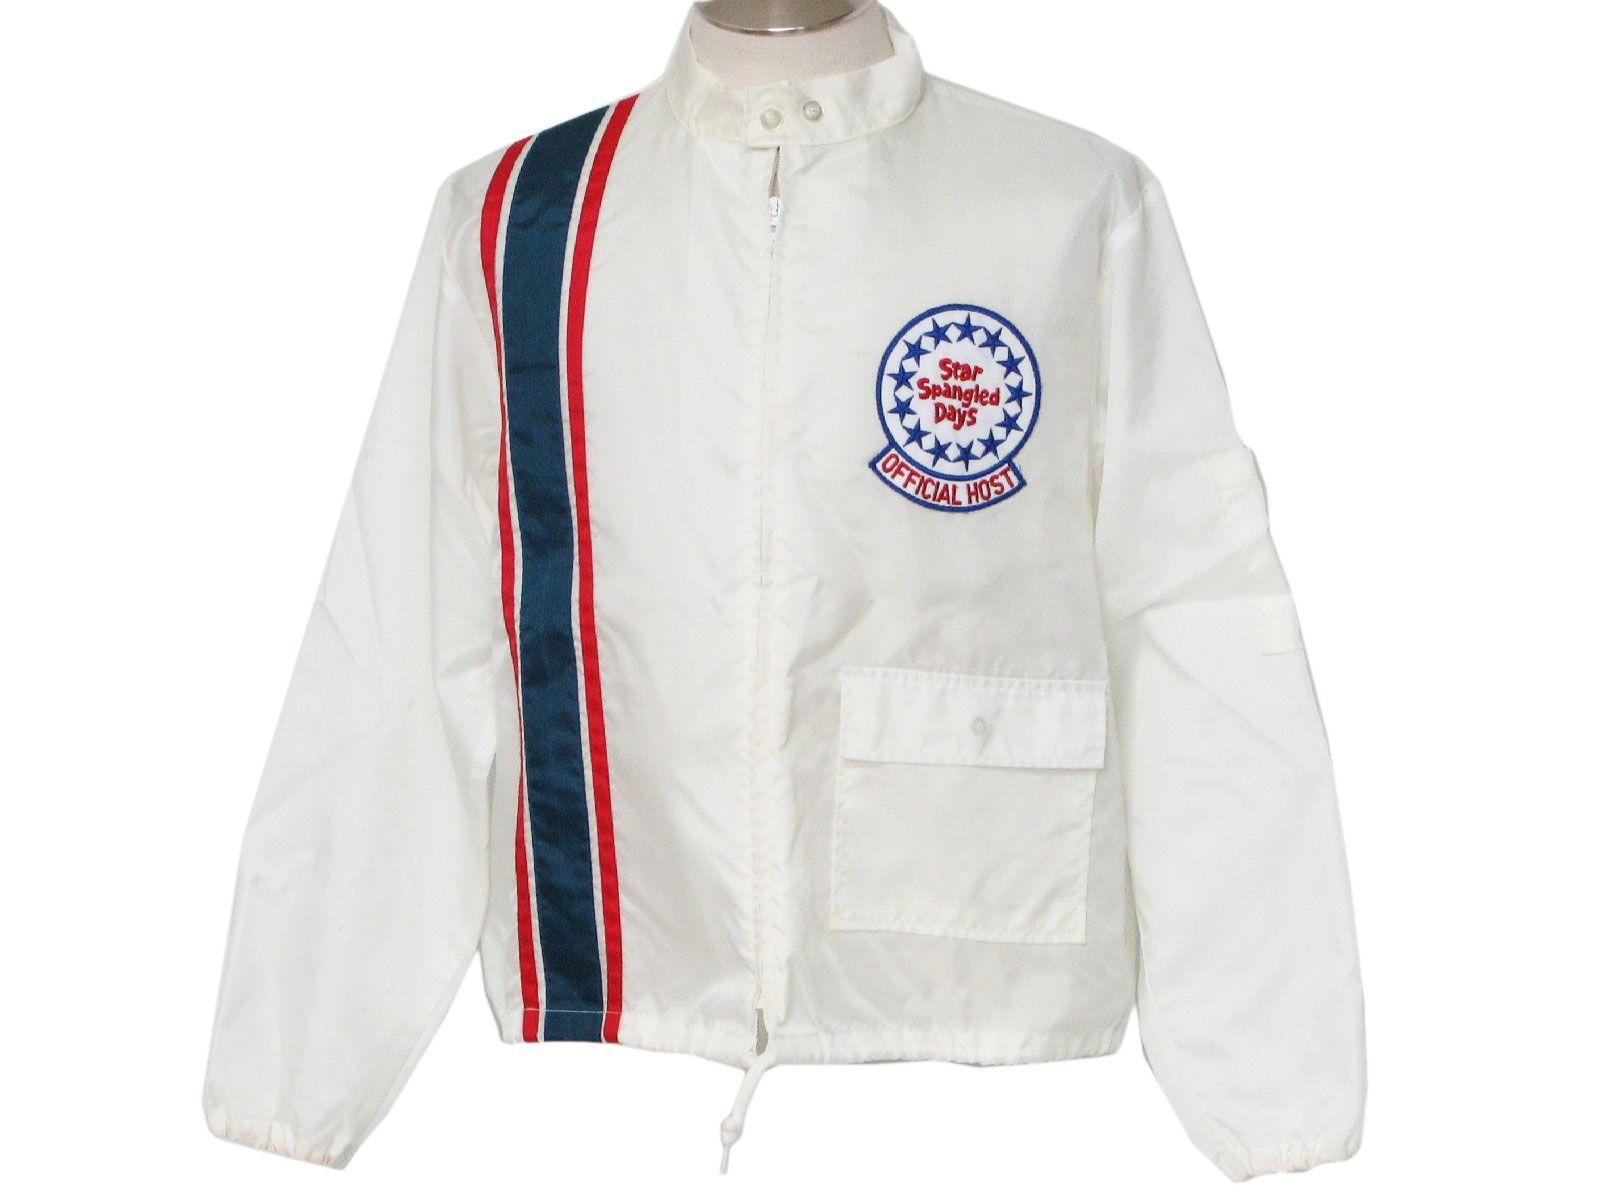 80s Fashion and Apparel Logo - Vintage Elin Racing Apparel 1980s Jacket: 80s -Elin Racing Apparel